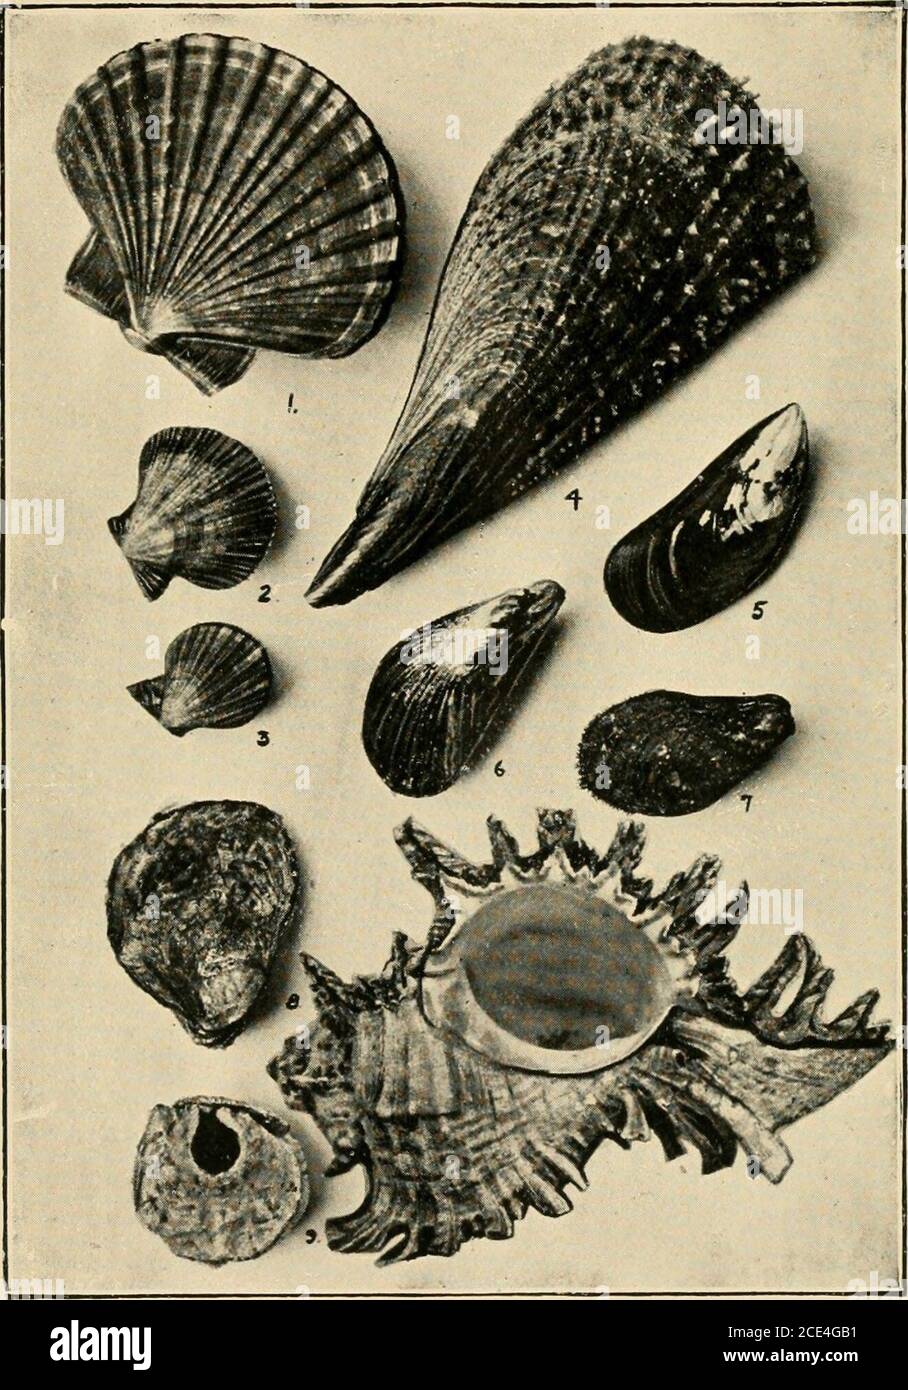 . Beautiful shells of New Zealand : an illustrated work for amateur collectors of New Zealand marine shells, with directions for collecting and cleaning them . iculina6—Rhynchoiiella nigricans7—TerebTatella sanguinea8—Lithophago truncatay—Venerapis reflexa10—Venerupis elegans11—Divaricella cumingi ..12—Venericardia australis 15—Chione crassa 14—Tapes intermedia15—Dosinia australis16—Dosinia subrosea17—Barbatia decussata ...18—Solenomya parkinsoni Page Page ... 37 19—M-odiolaria impacta .. ... 40 ... 37 20—Lima buUata ... 41 ... 37 21—Lima zelandica ... 41 ... 37 22—Sub-emarginula intermedia 41 Stock Photo